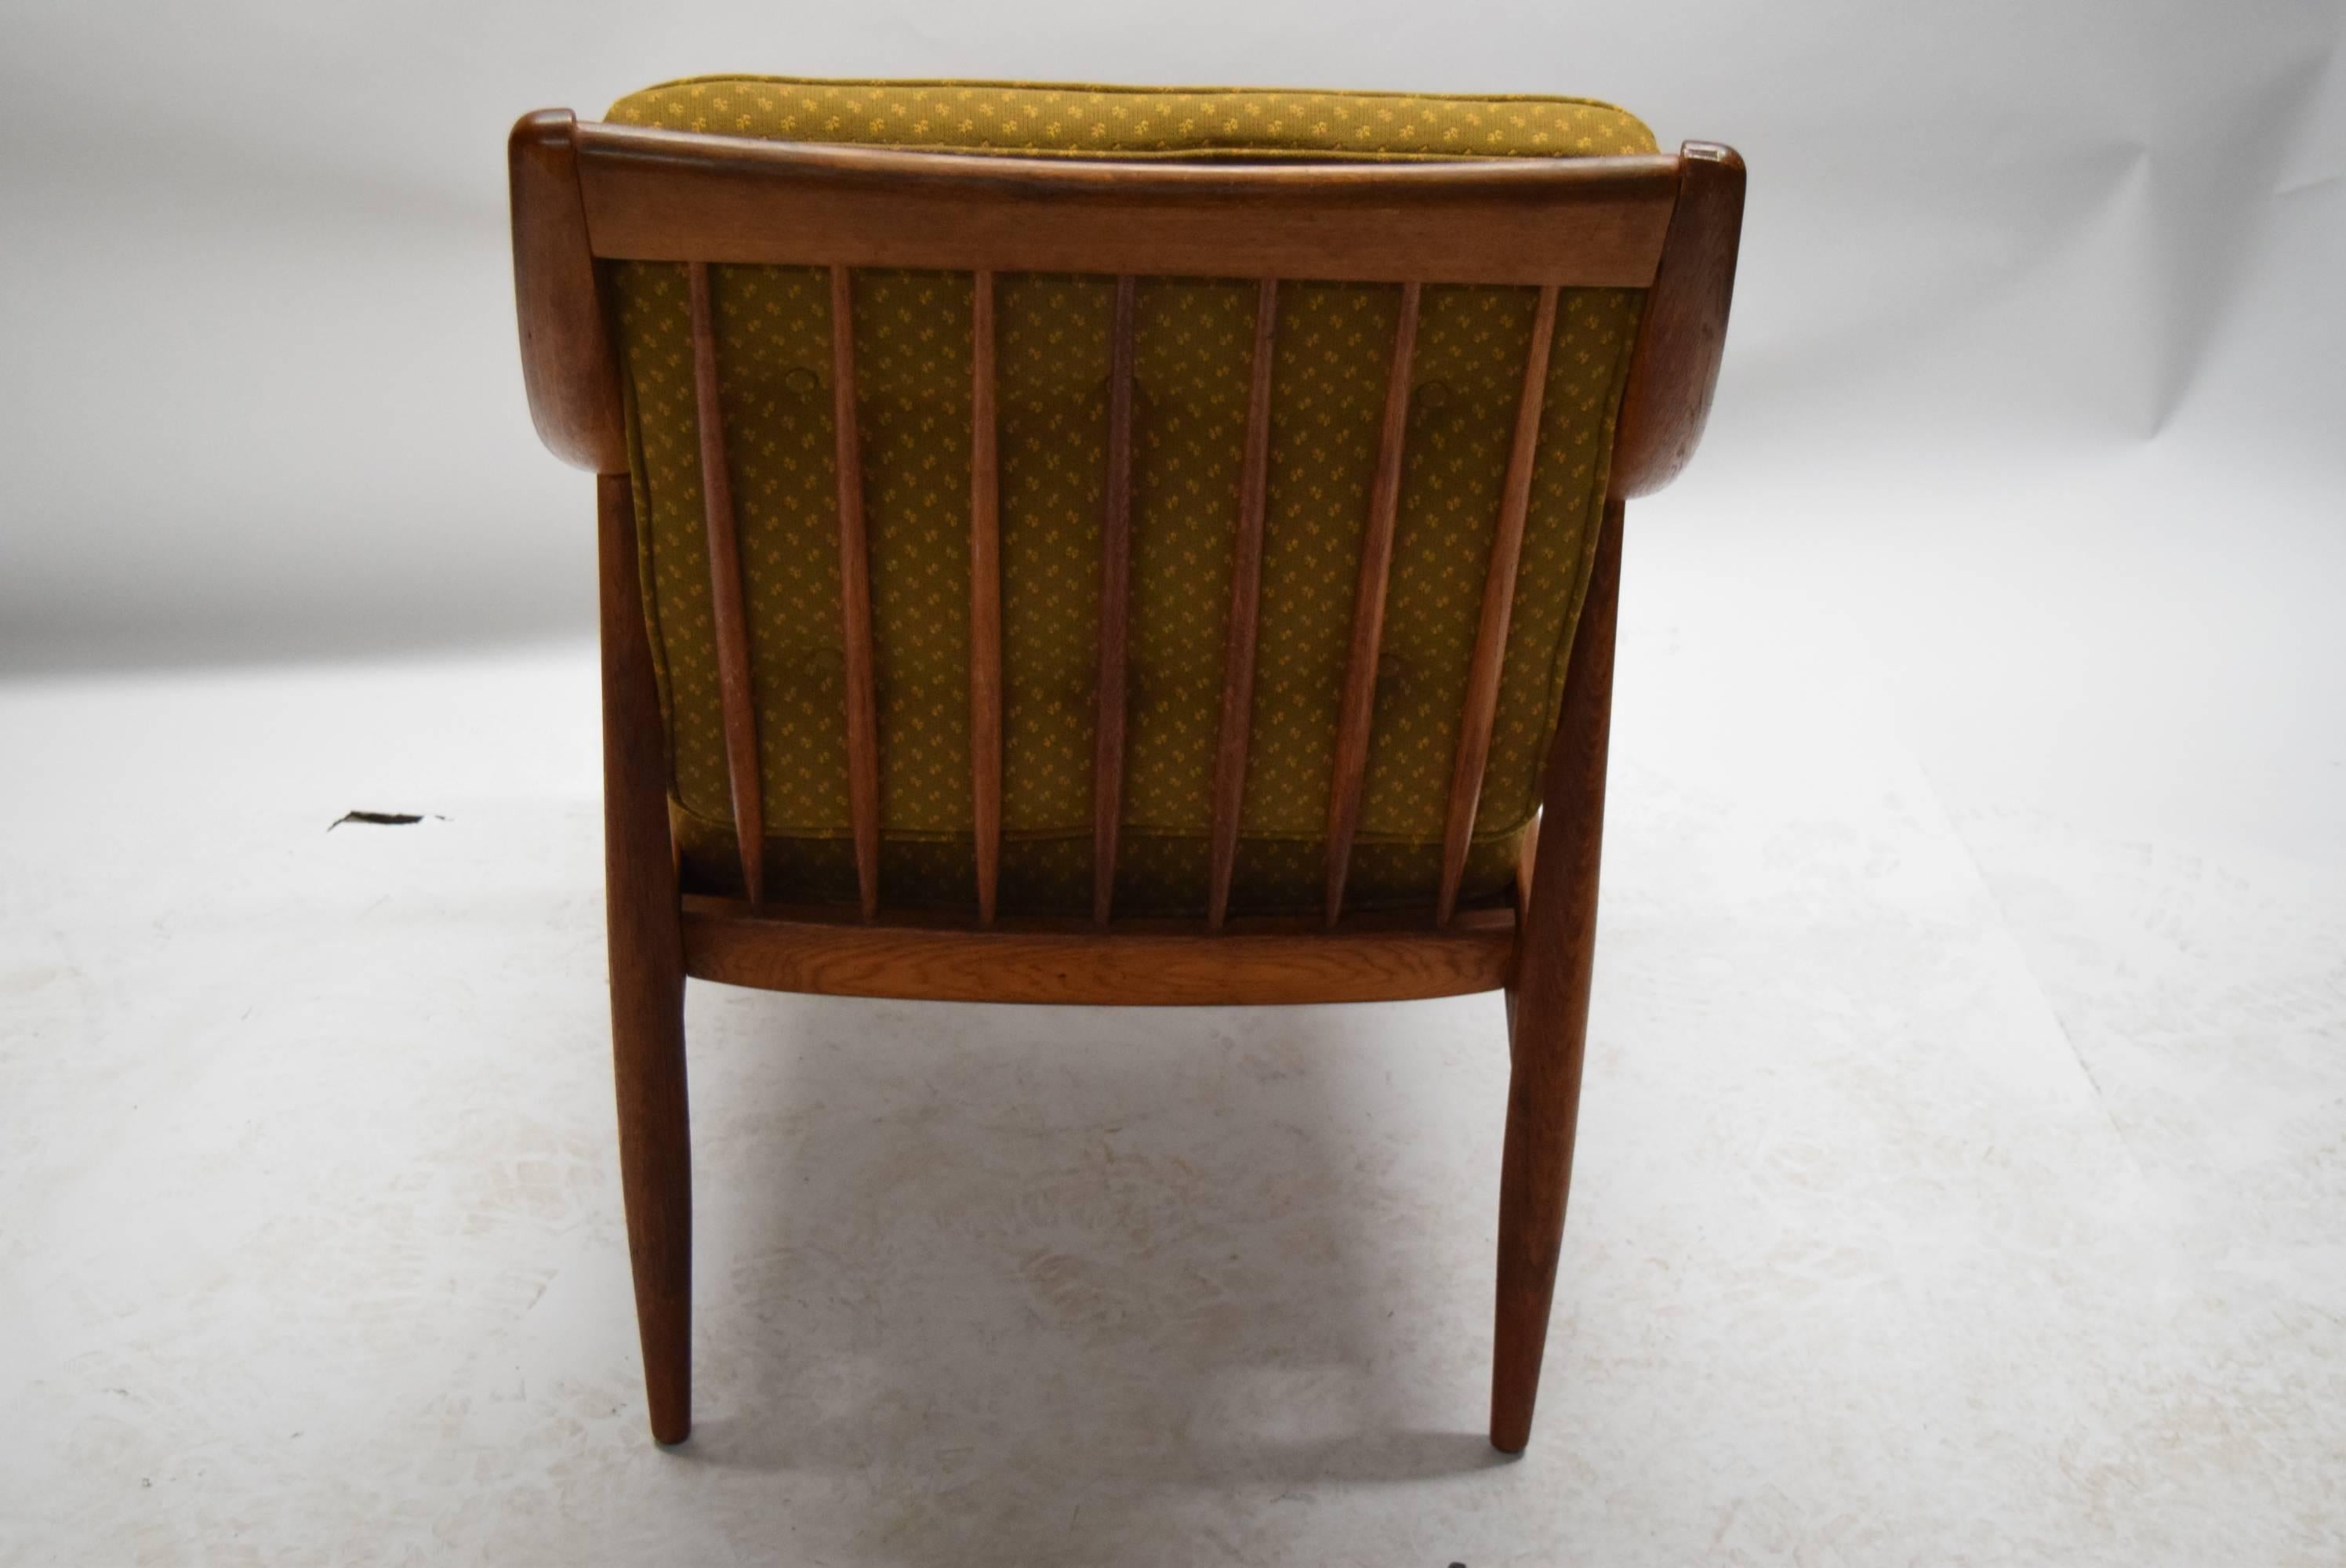 Scandinavian Modern Lounge Chair by Kofod-Larson for Selig, circa 1955 Made in Denmark